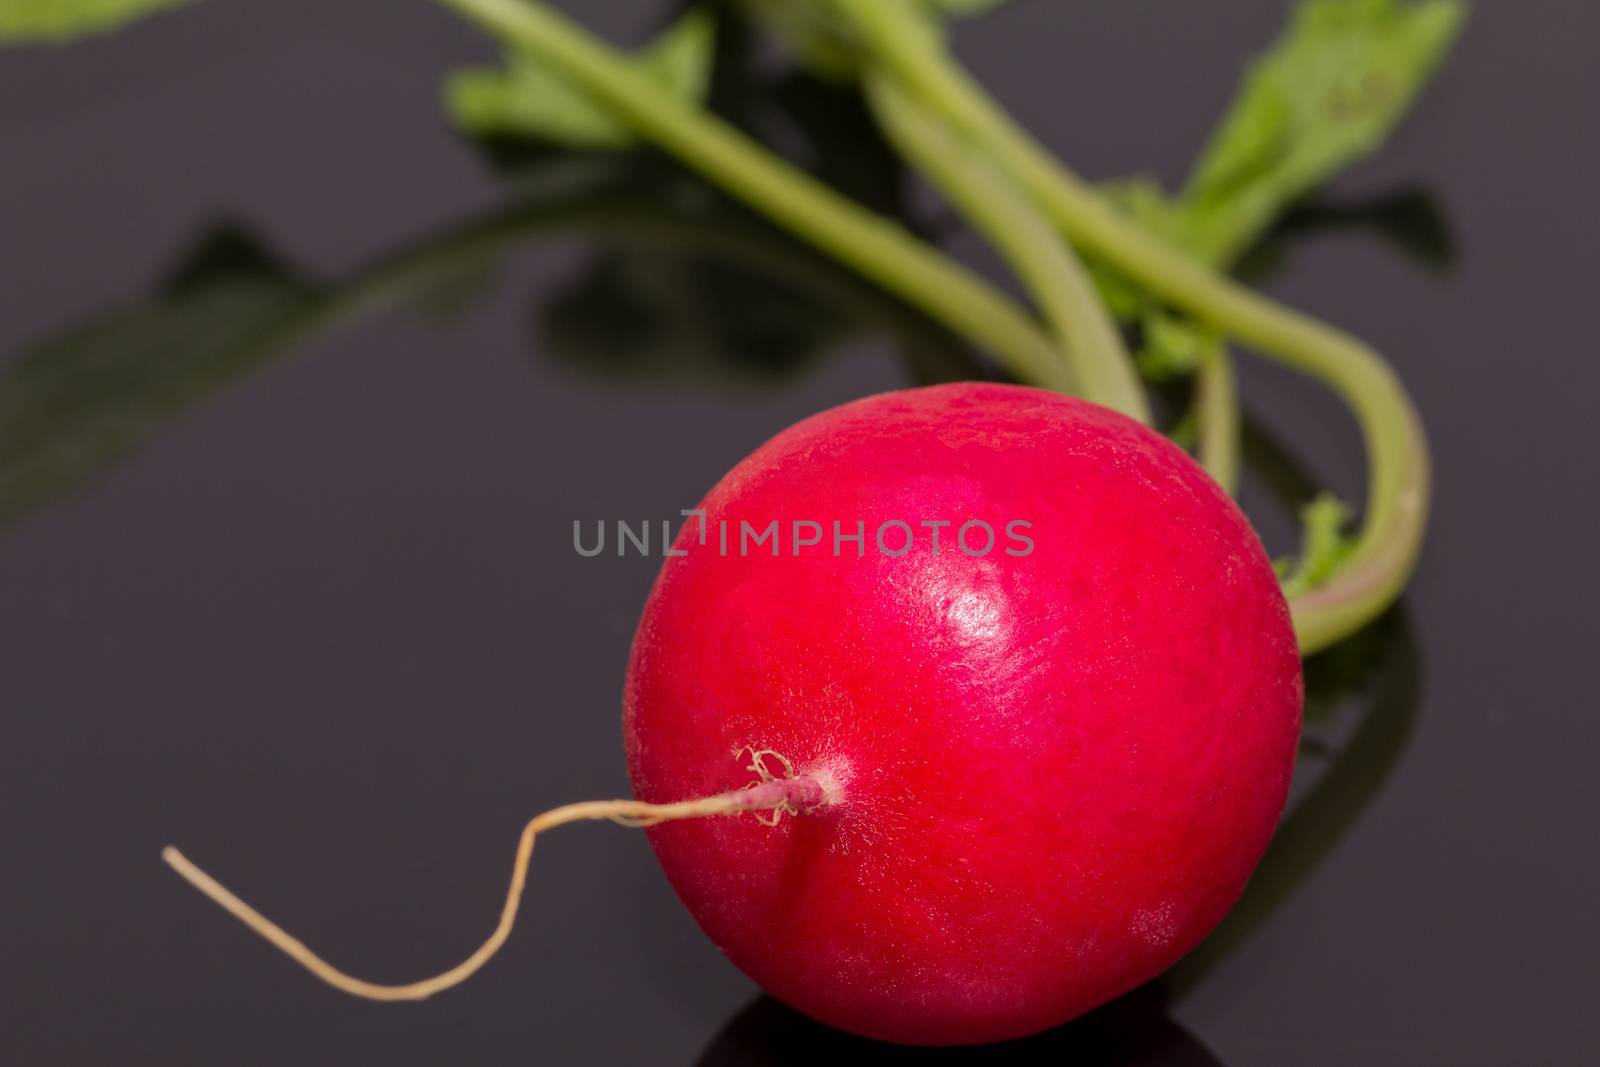 single red radish isolatet on dark background - closeup